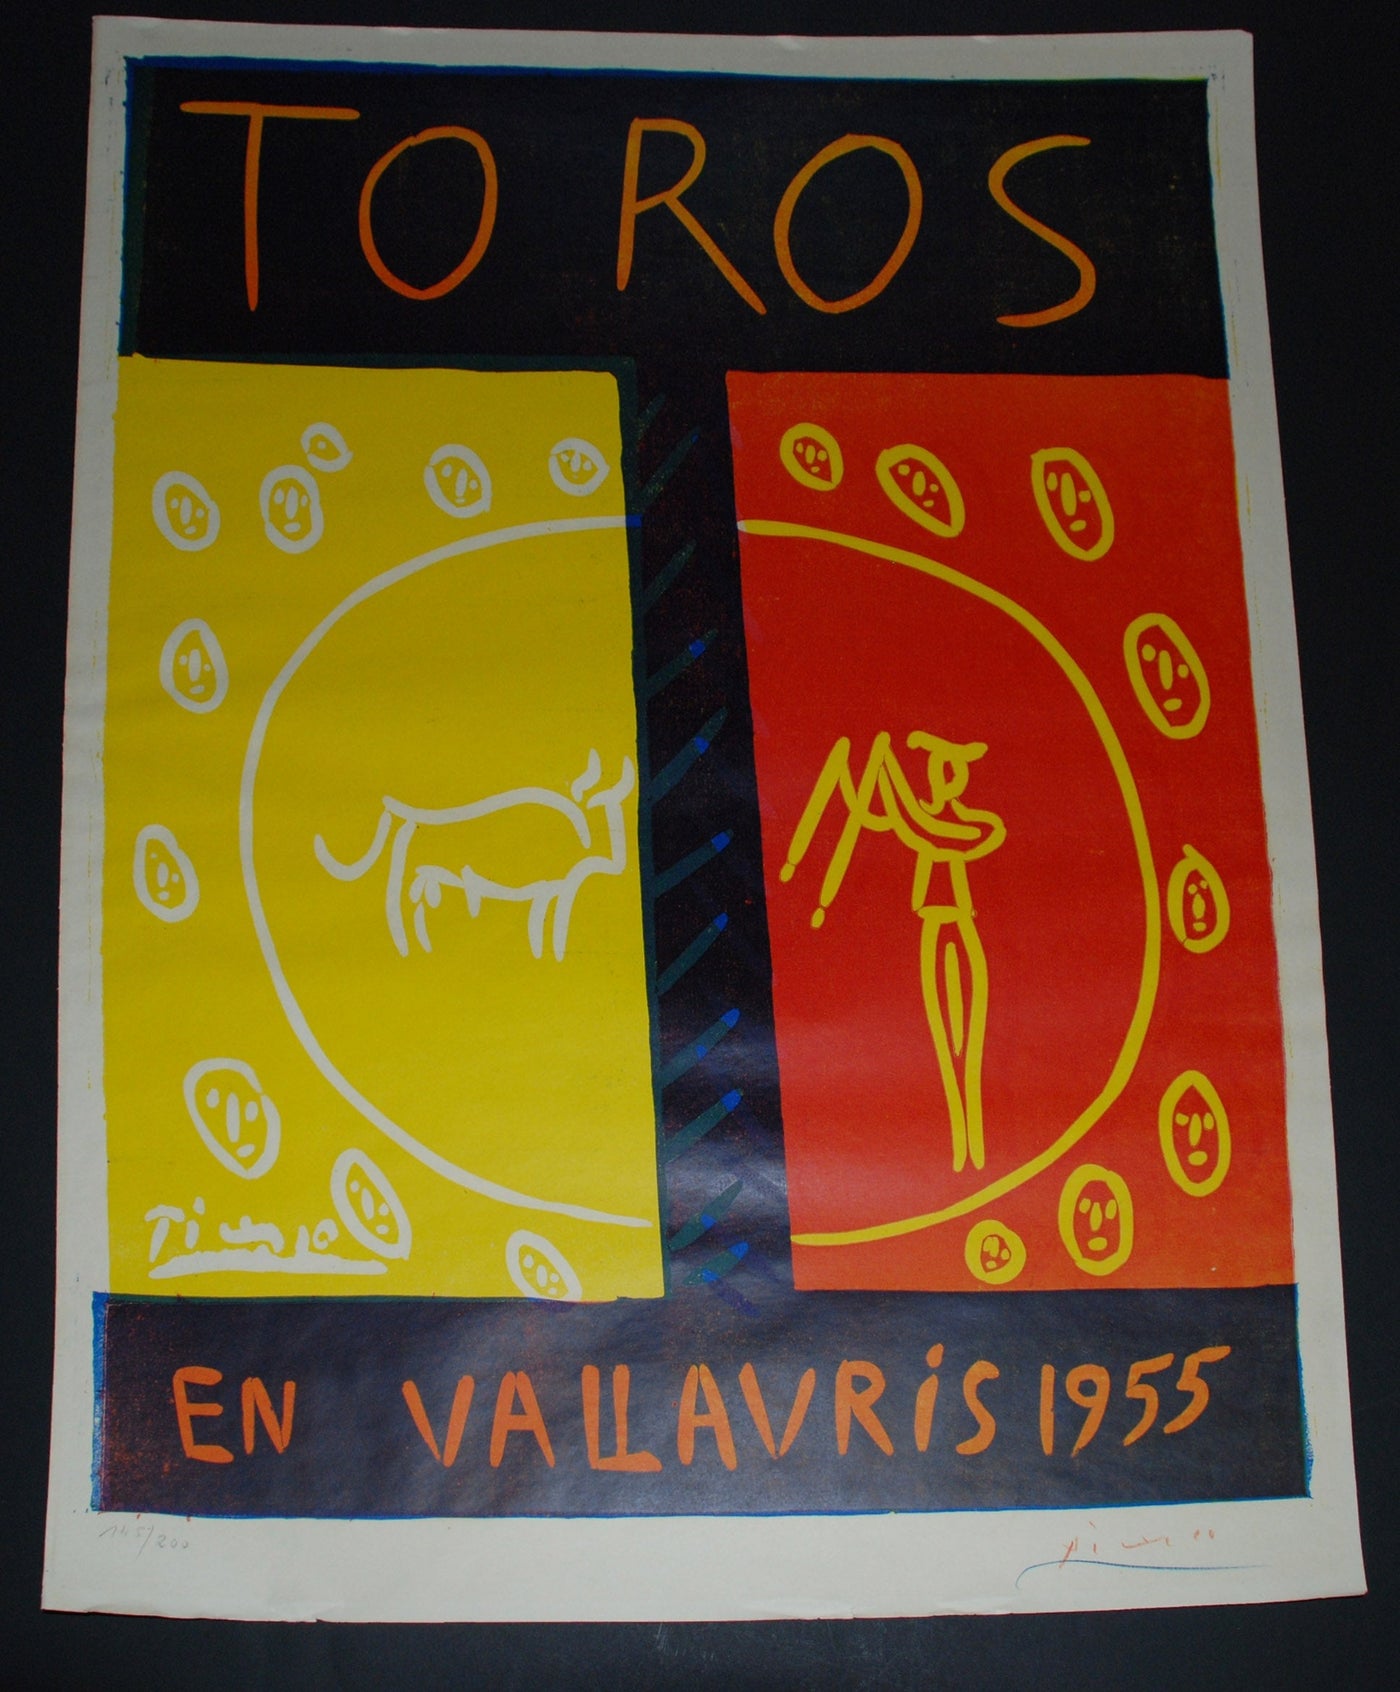 Pablo Picasso Toros en Vallauris 1955 (Bloch 1265, Czw 14, Mourlot 74, Kramer 123) 1955